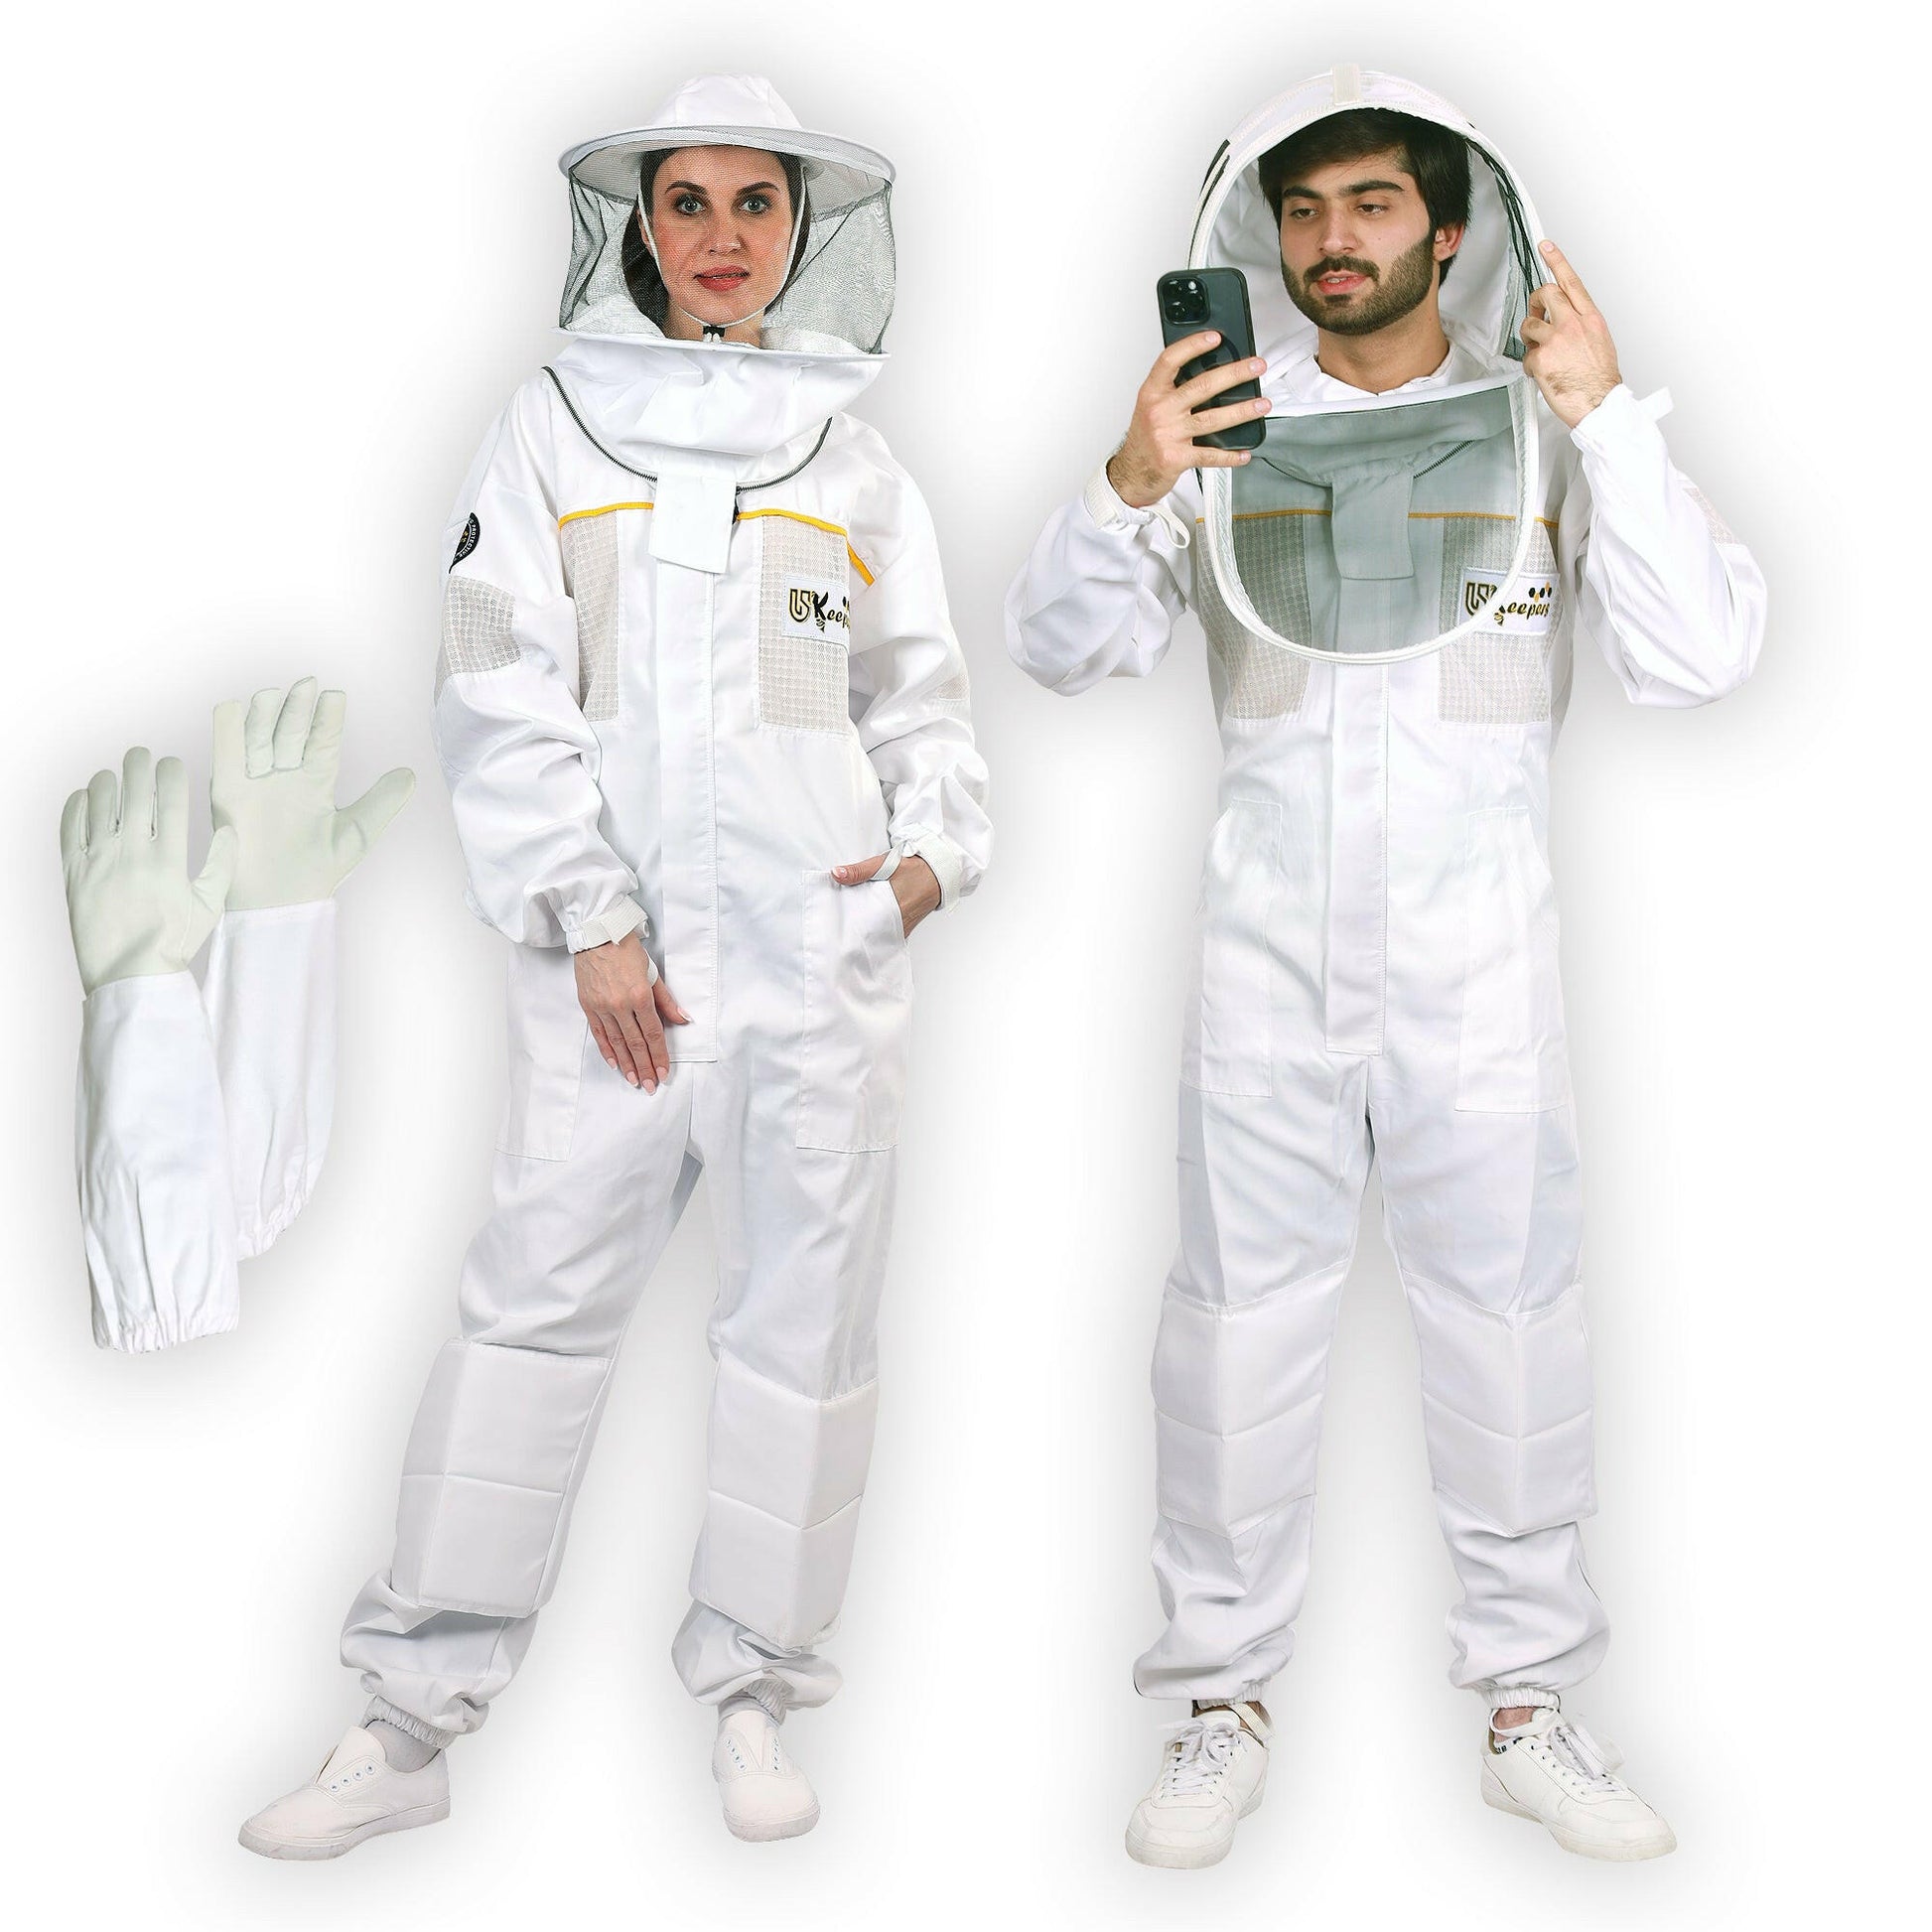 Premium Beekeeper Suits Semi Ventilated Bee keeper Protective Gear.